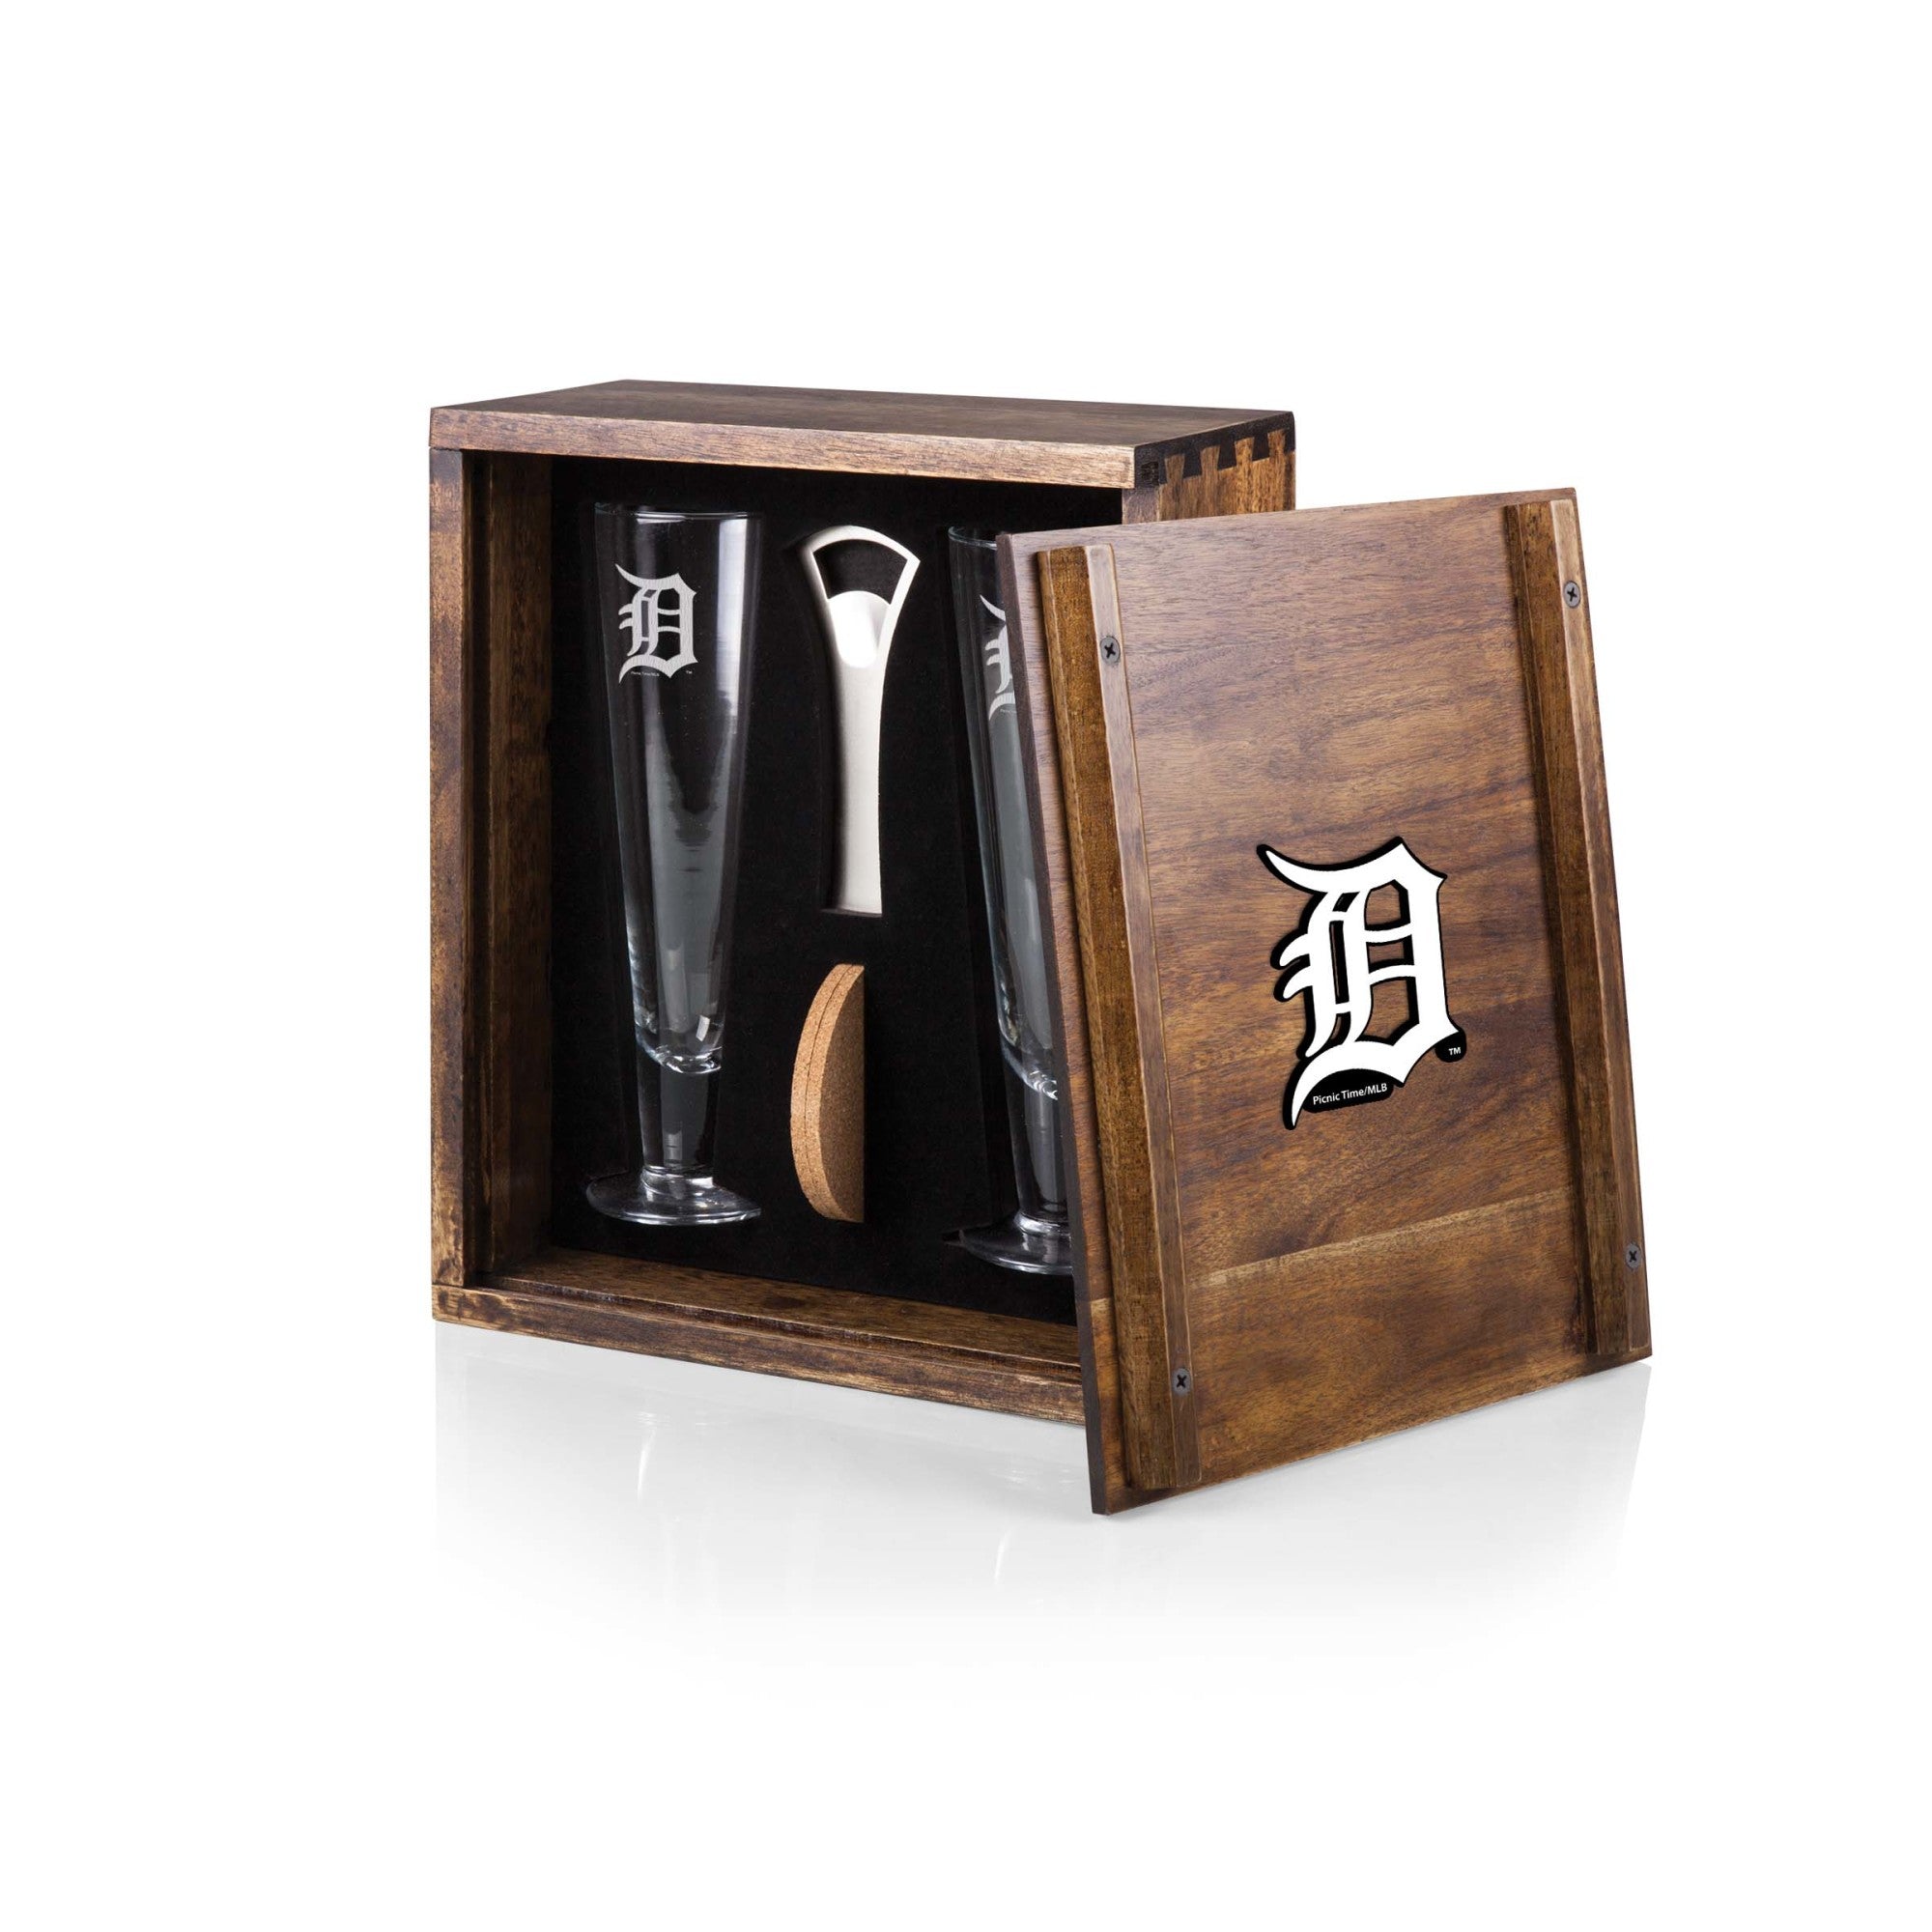 Detroit Tigers - Pilsner Beer Glass Gift Set – PICNIC TIME FAMILY